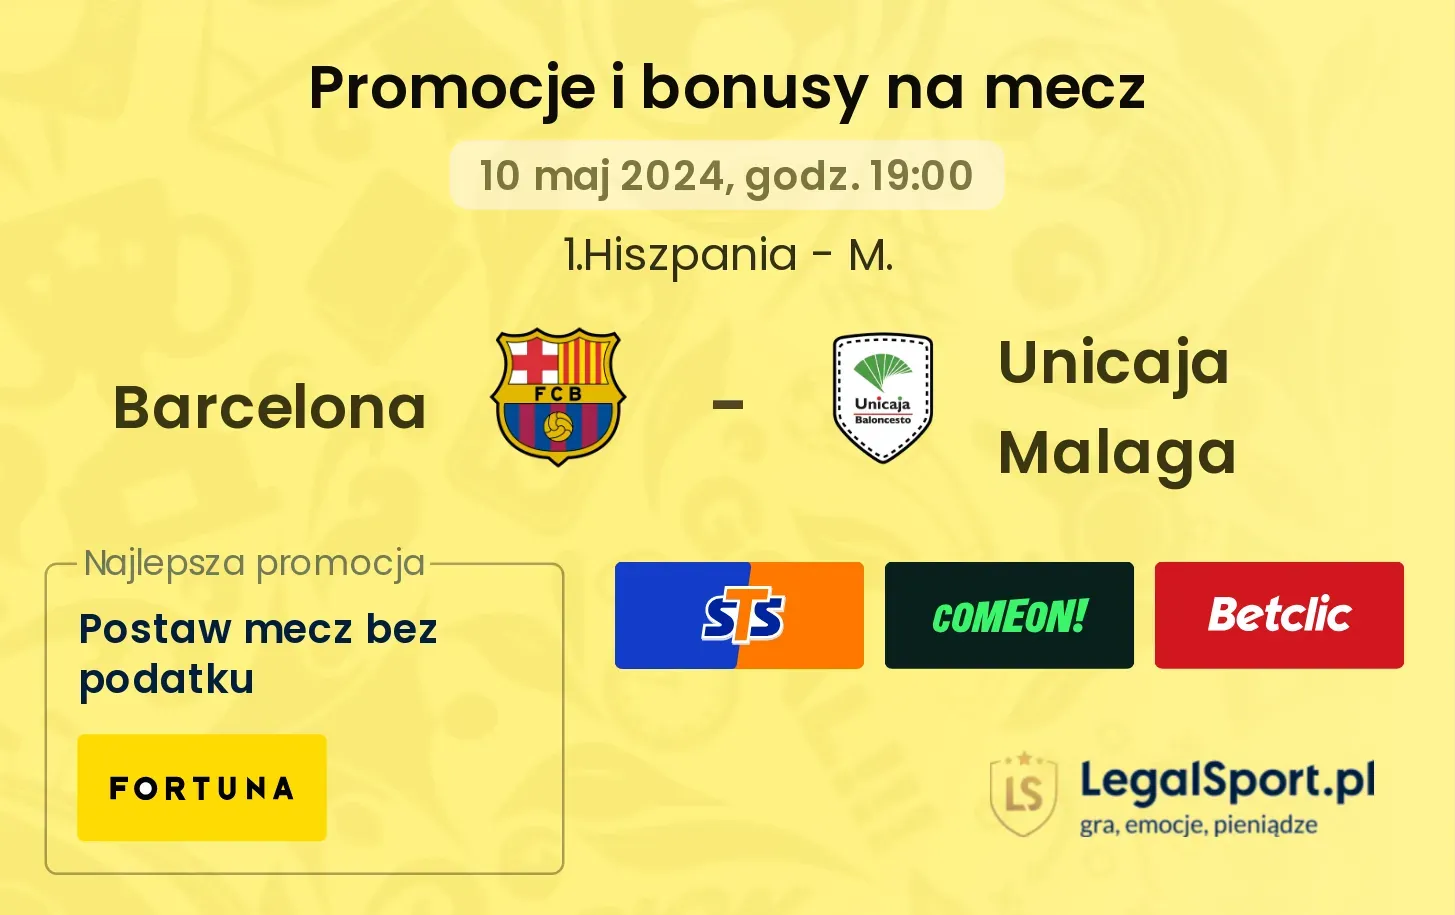 Barcelona - Unicaja Malaga bonusy i promocje (10.05, 19:00)